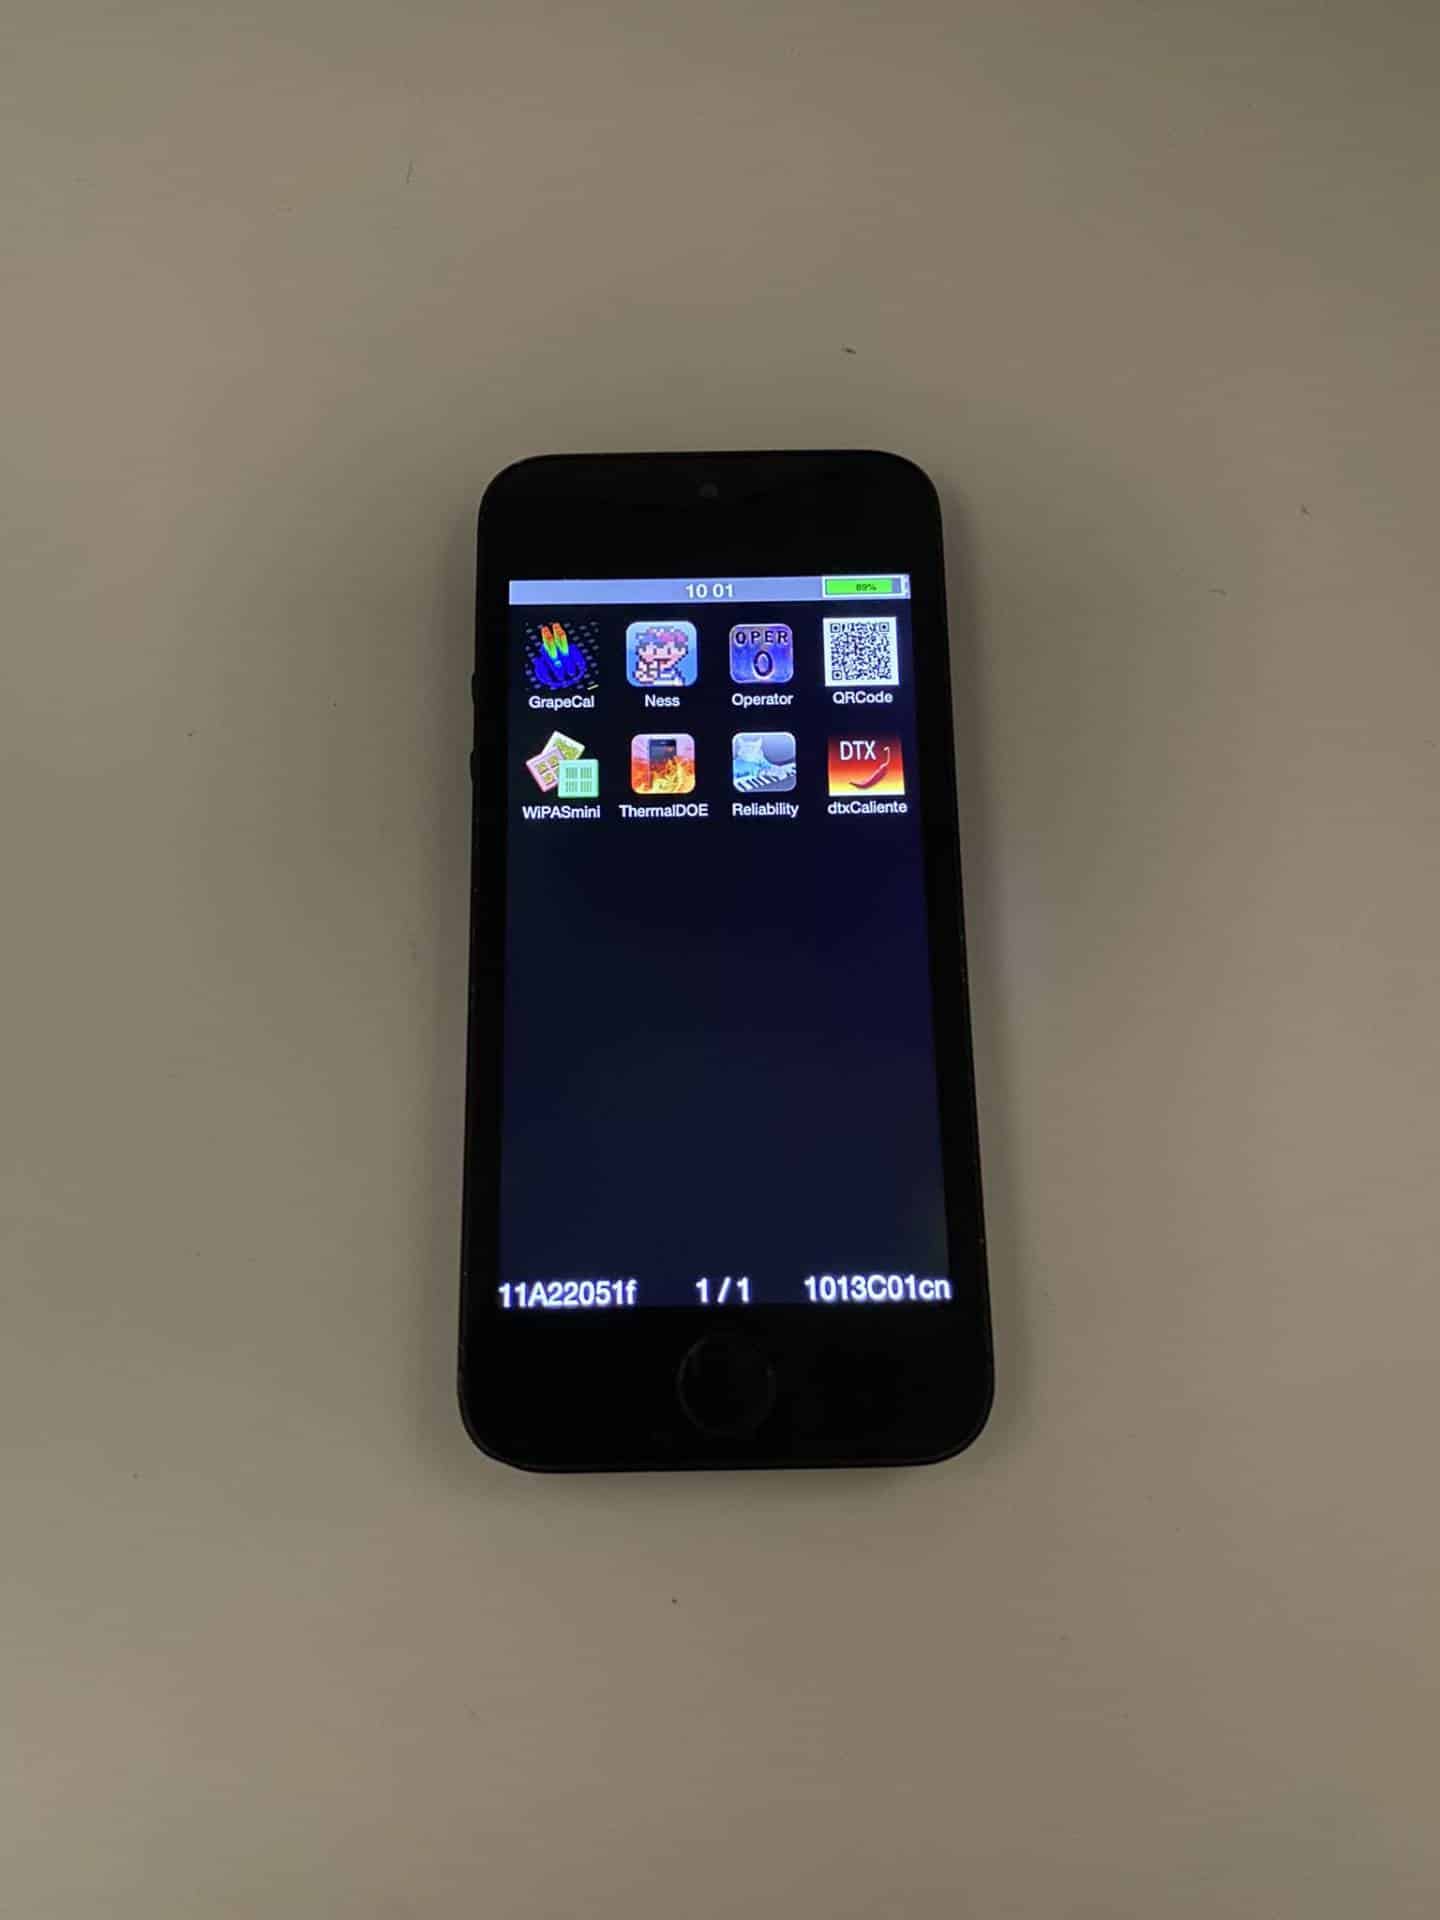 Prototyp iPhonu 5S vo farbe "Slate Gray"